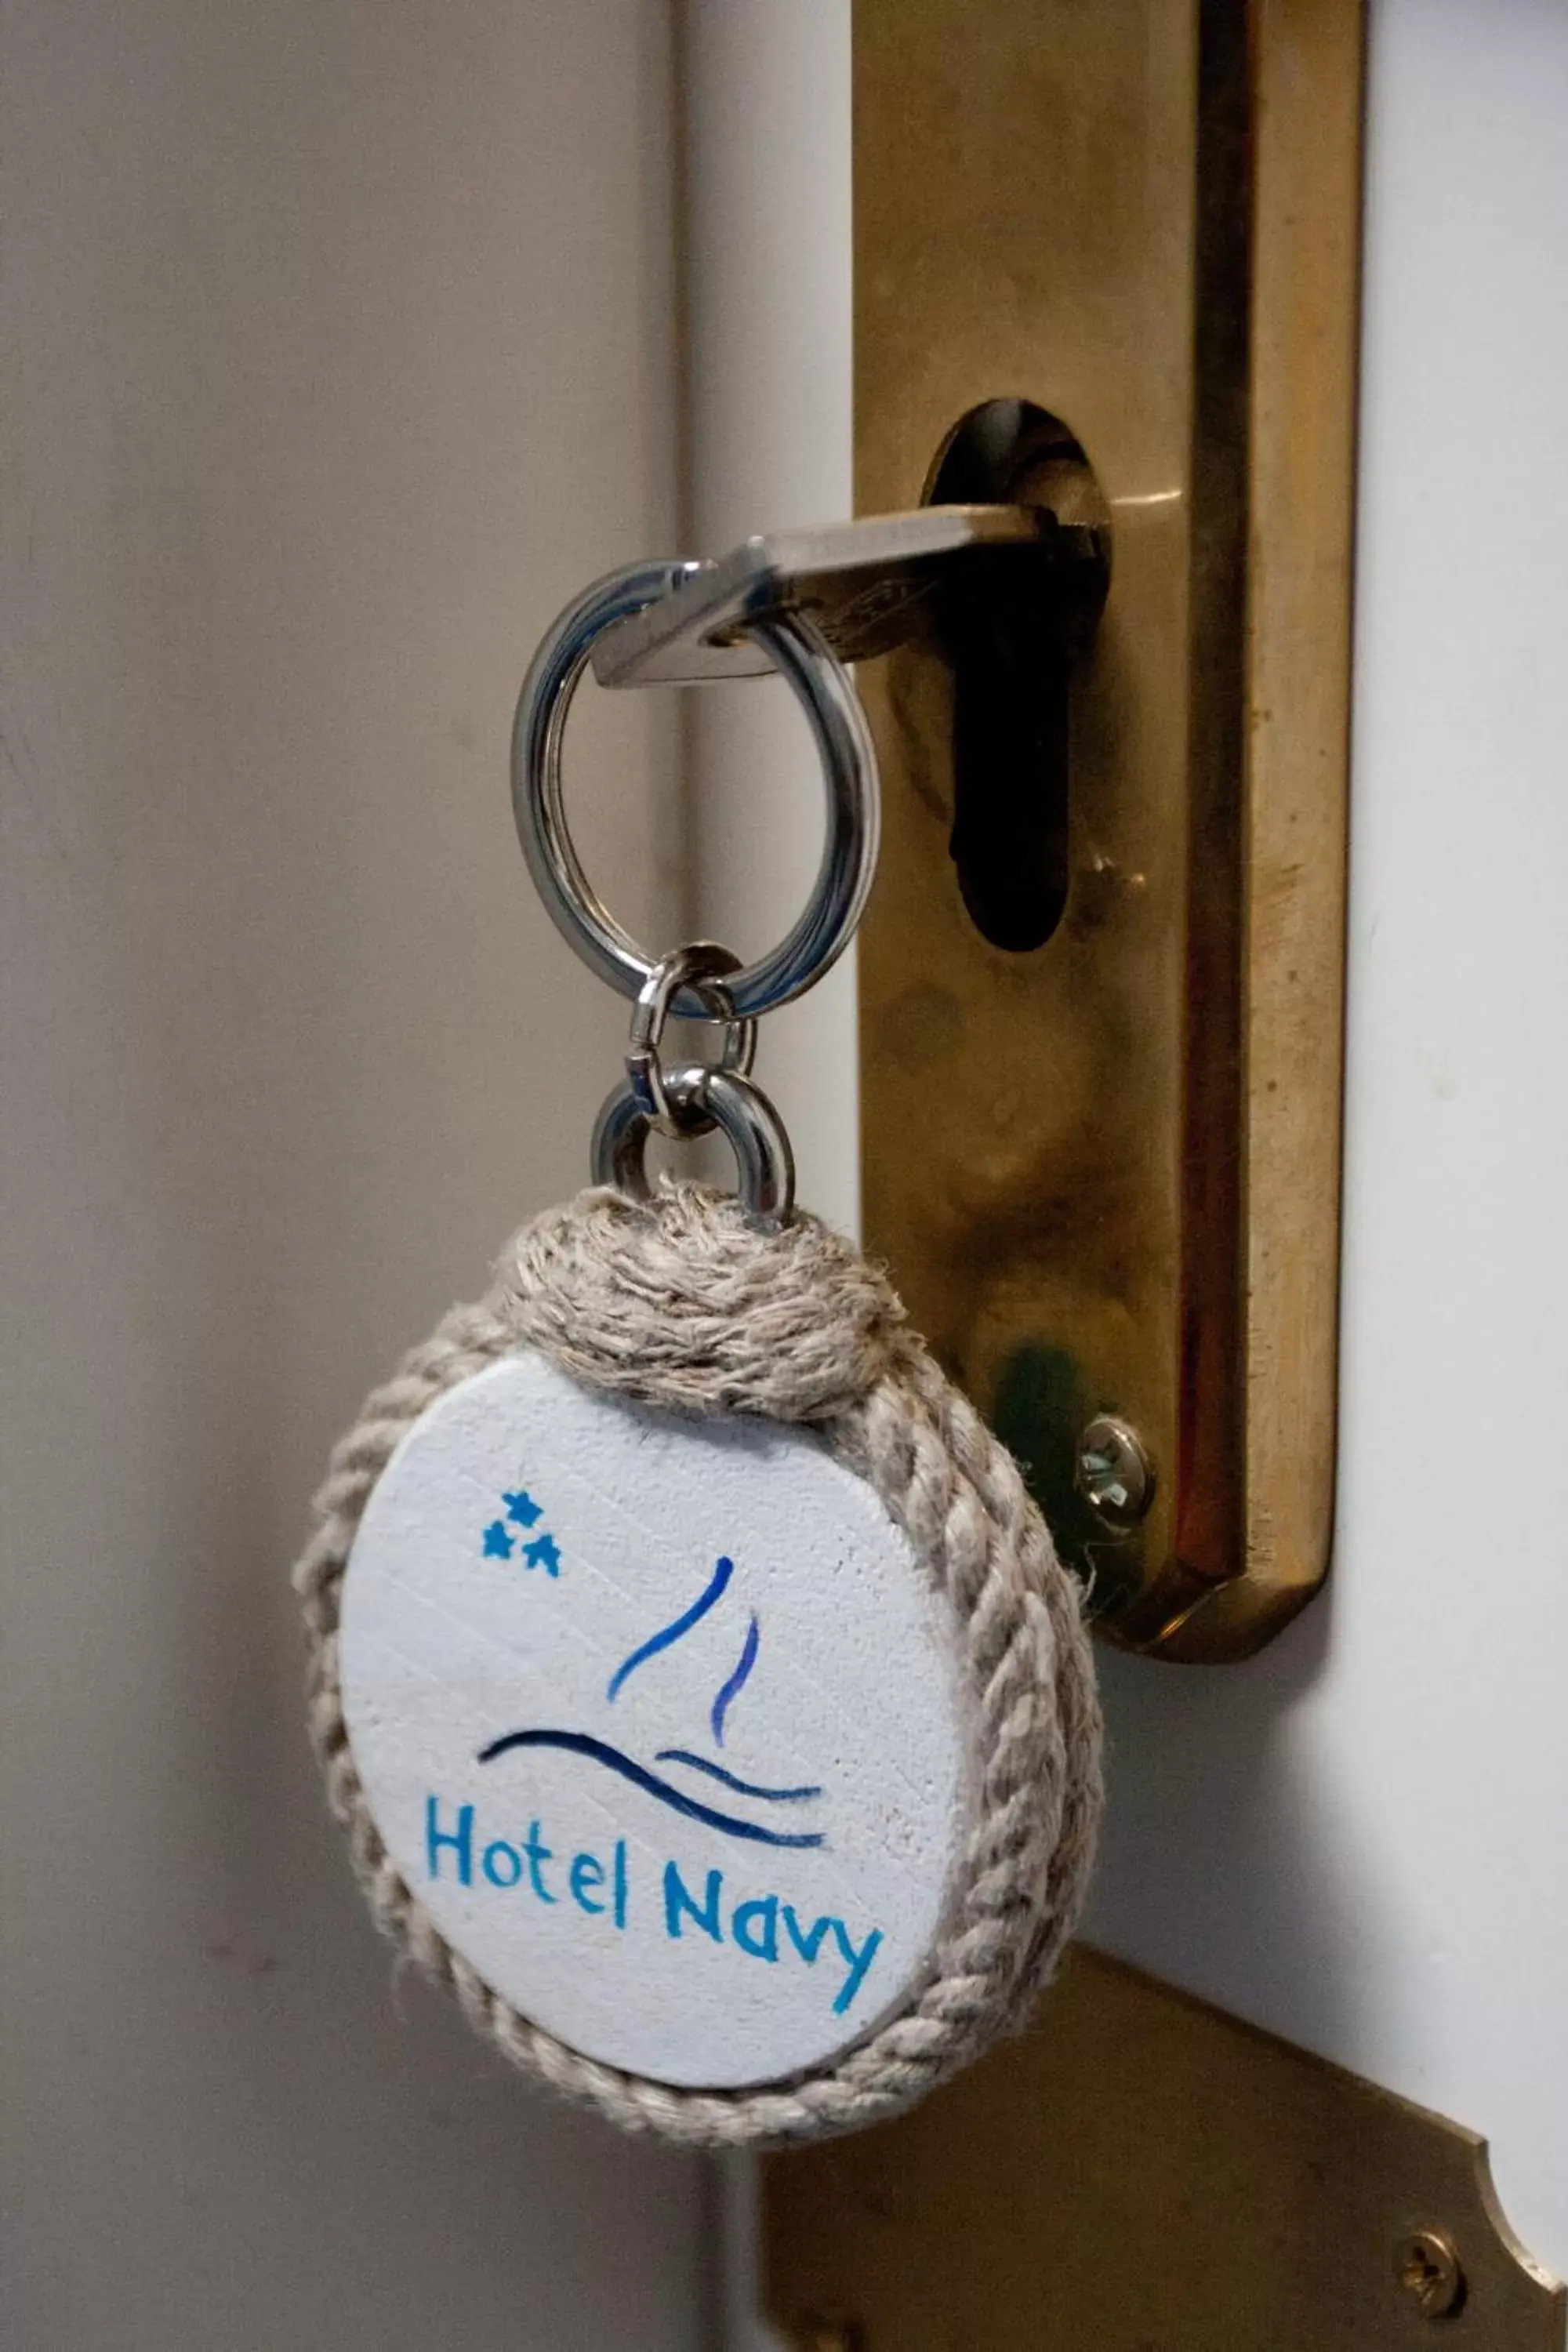 Decorative detail in Hotel Navy